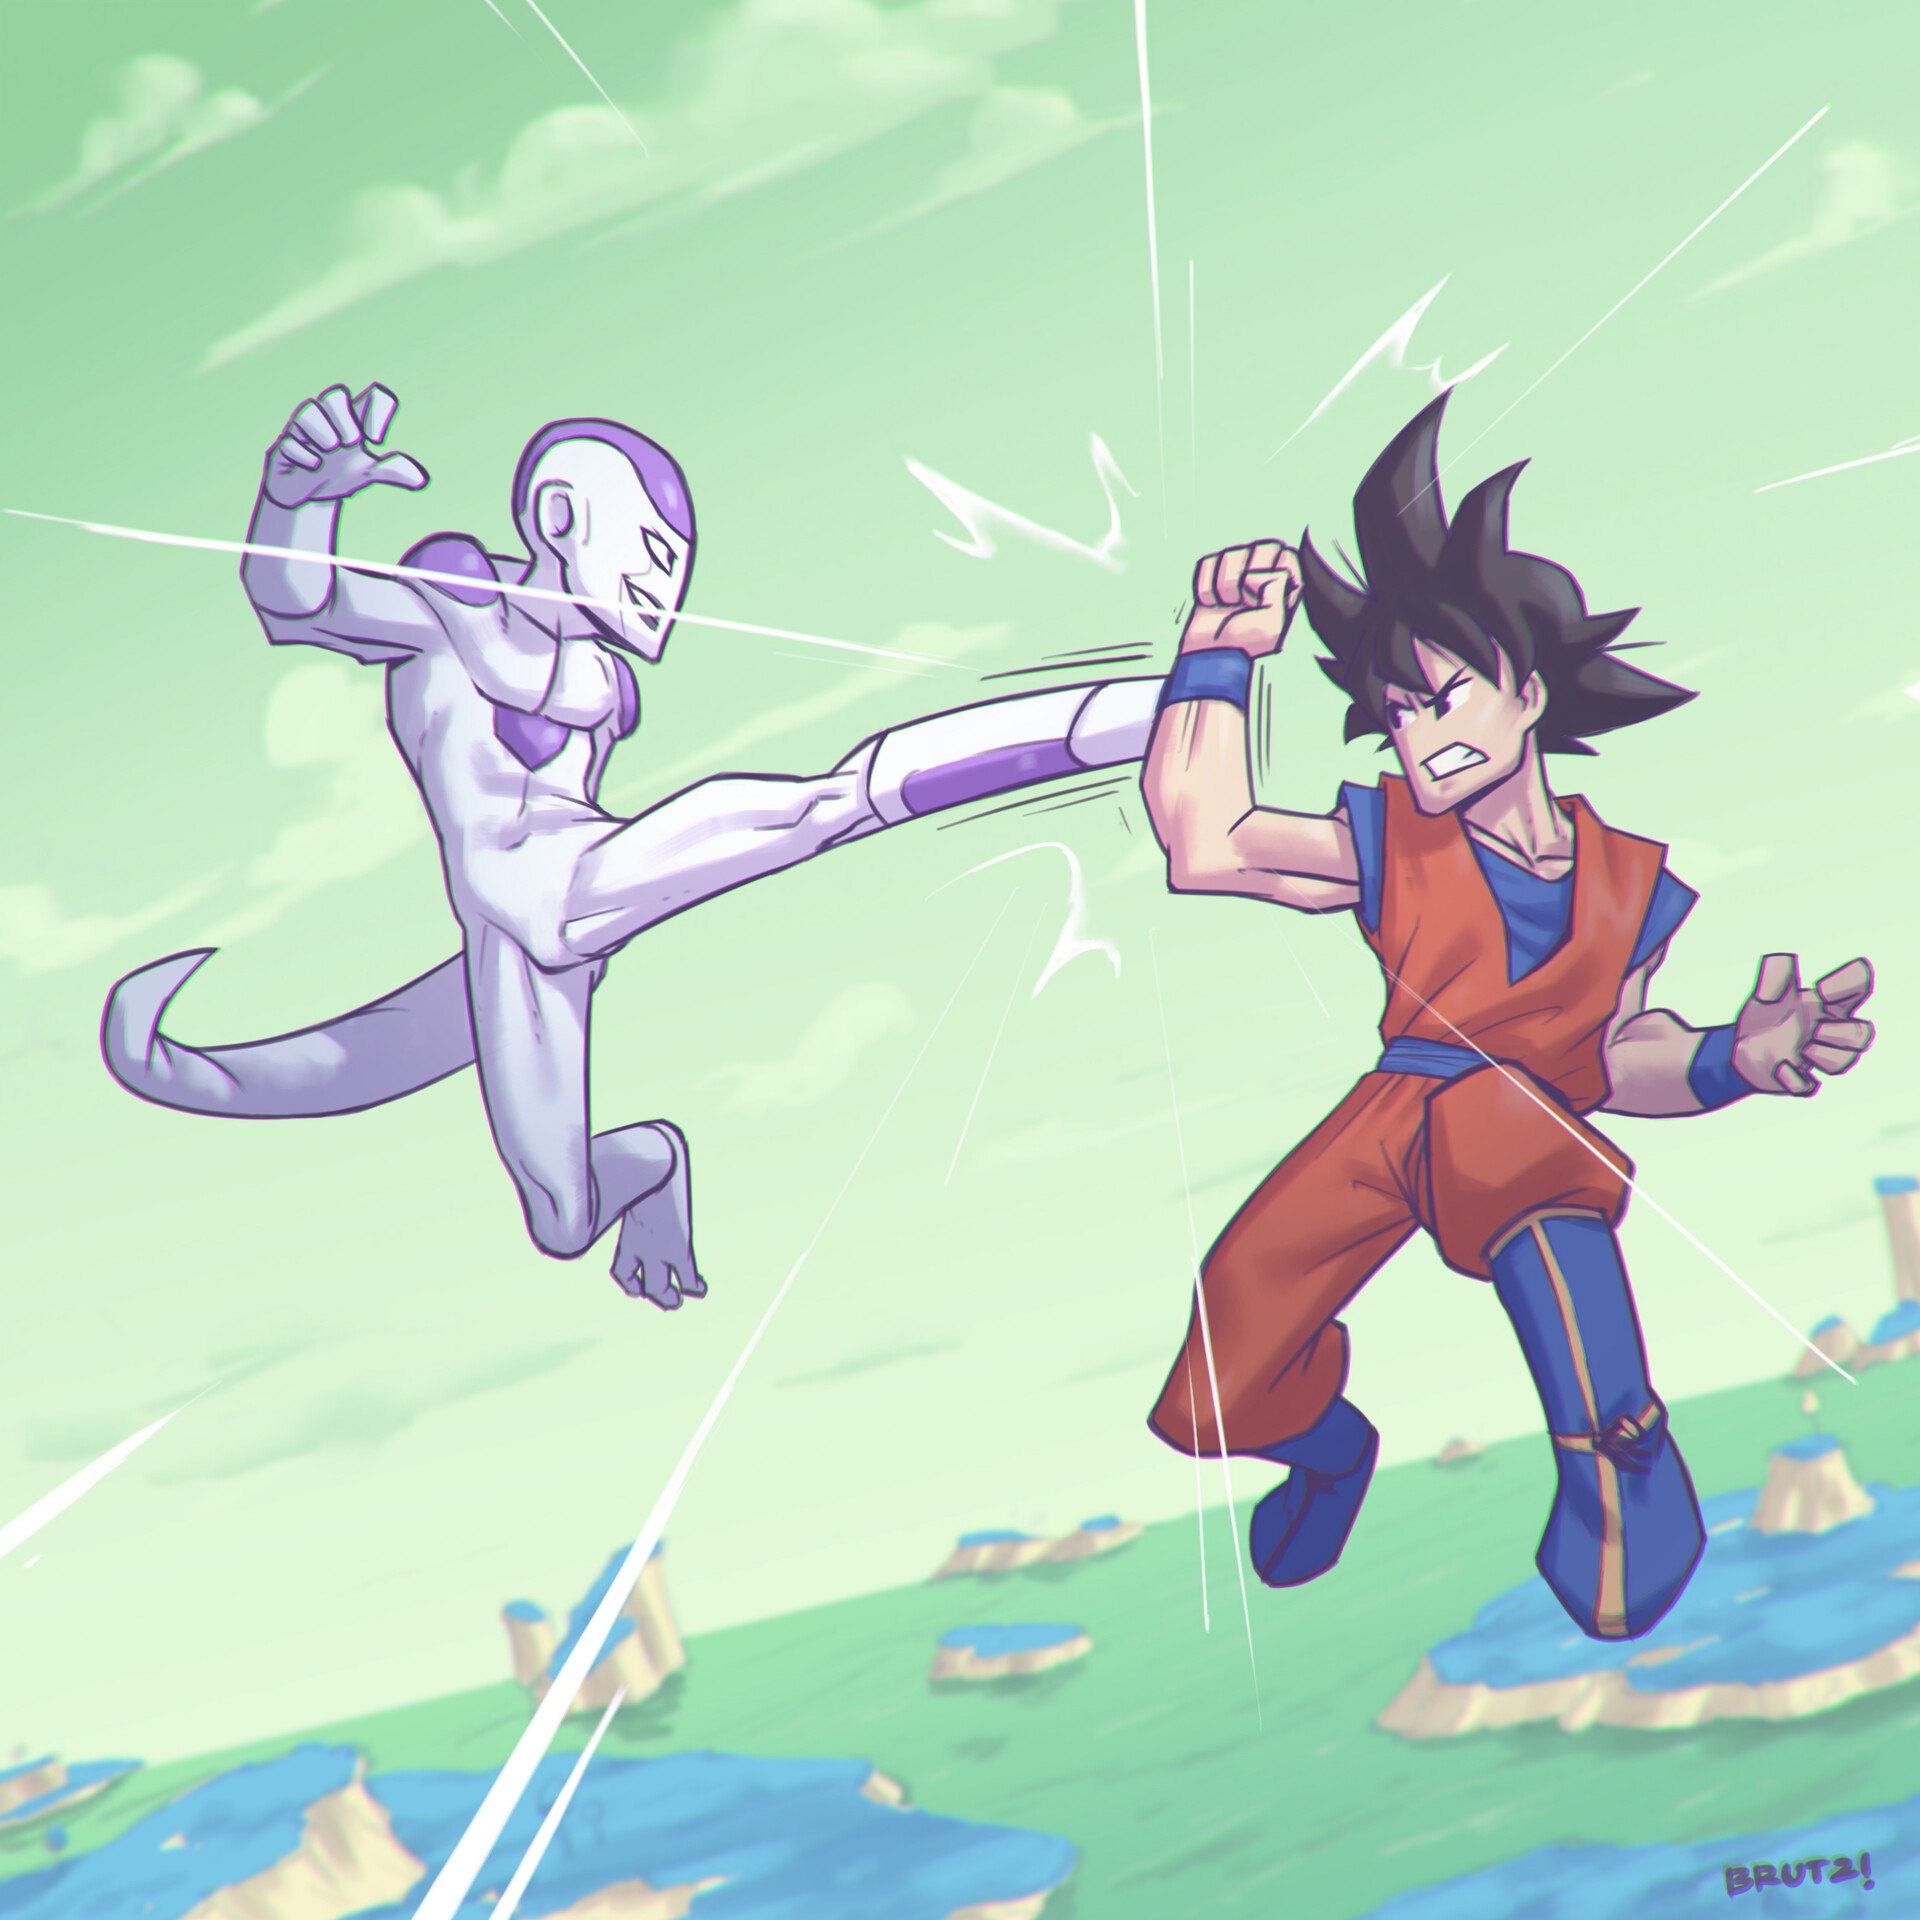 ArtStation - Frieza vs Goku